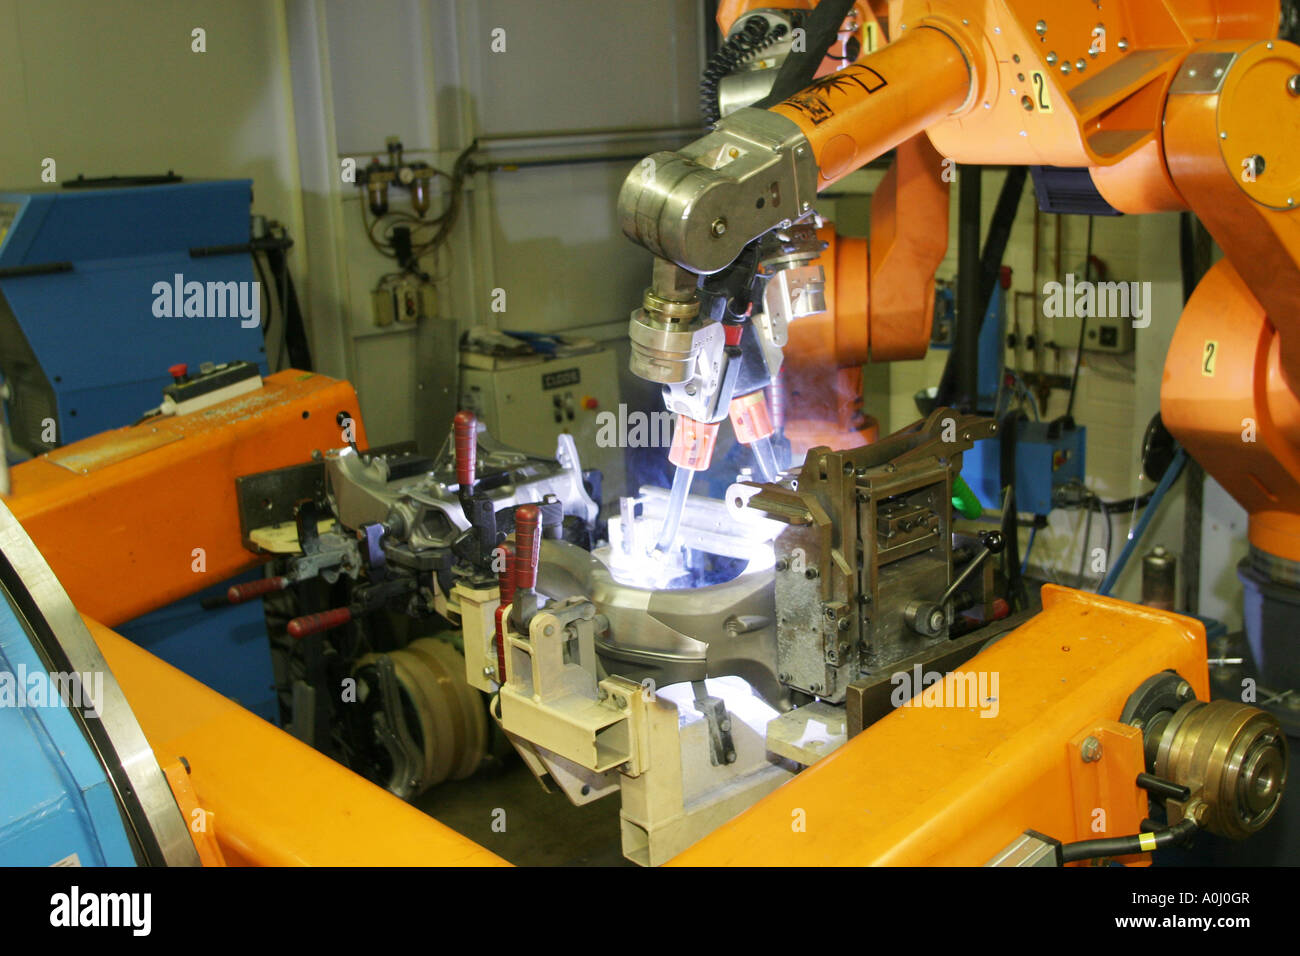 Robot welding, BMW motorcycle factory in Berlin, Germany Stock Photo